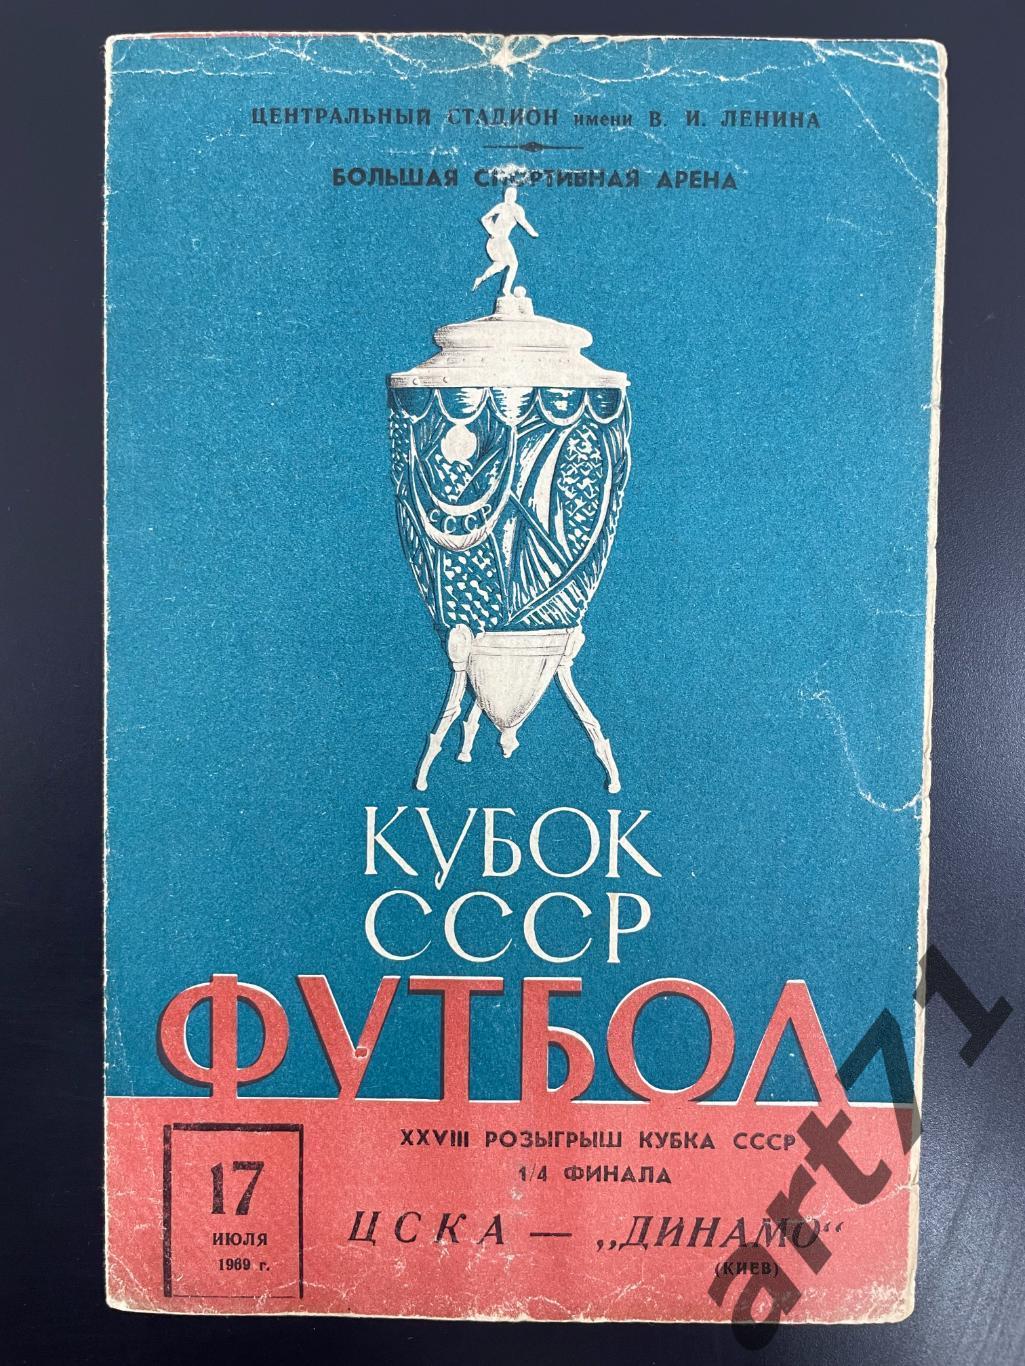 ЦСКА Москва - Динамо Киев 1969 кубок СССР